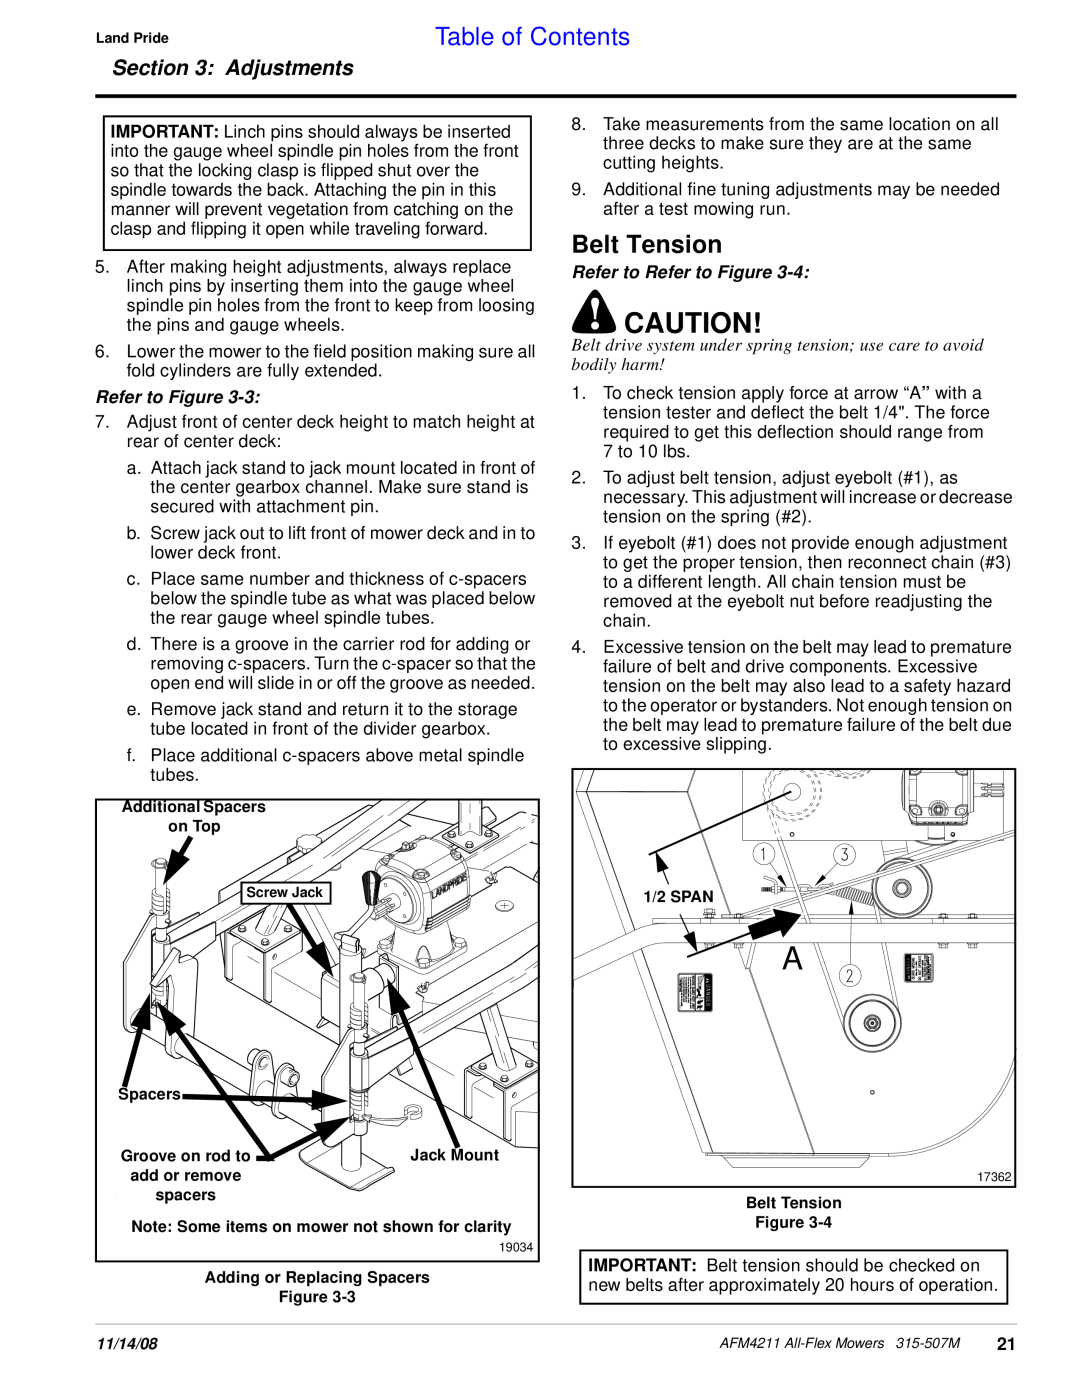 Land Pride AFM4211 manual Belt Tension, Table of Contents, Adjustments, Refer to Refer to Figure 